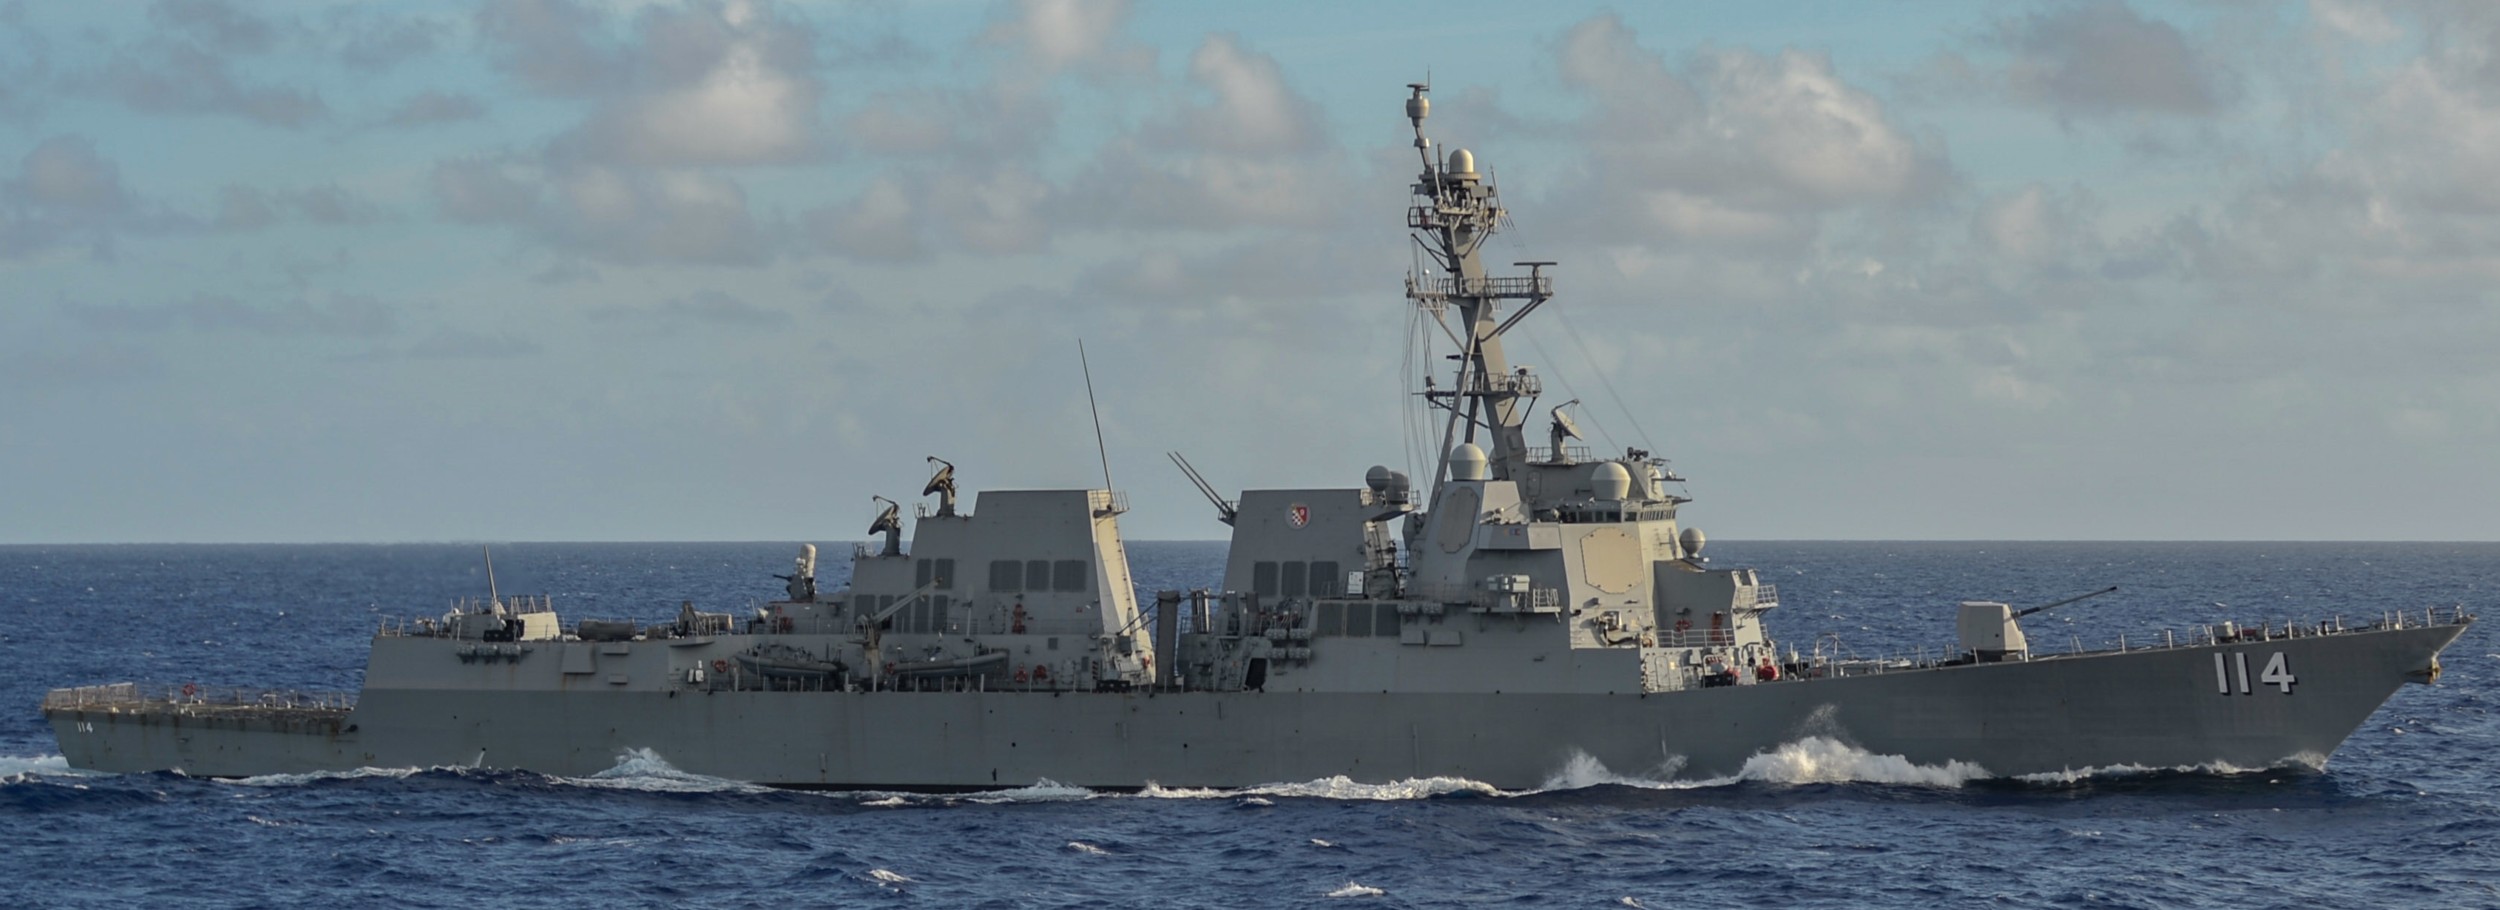 ddg-114 uss ralph johnson arleigh burke class guided missile destroyer us navy aegis 32 philippine sea